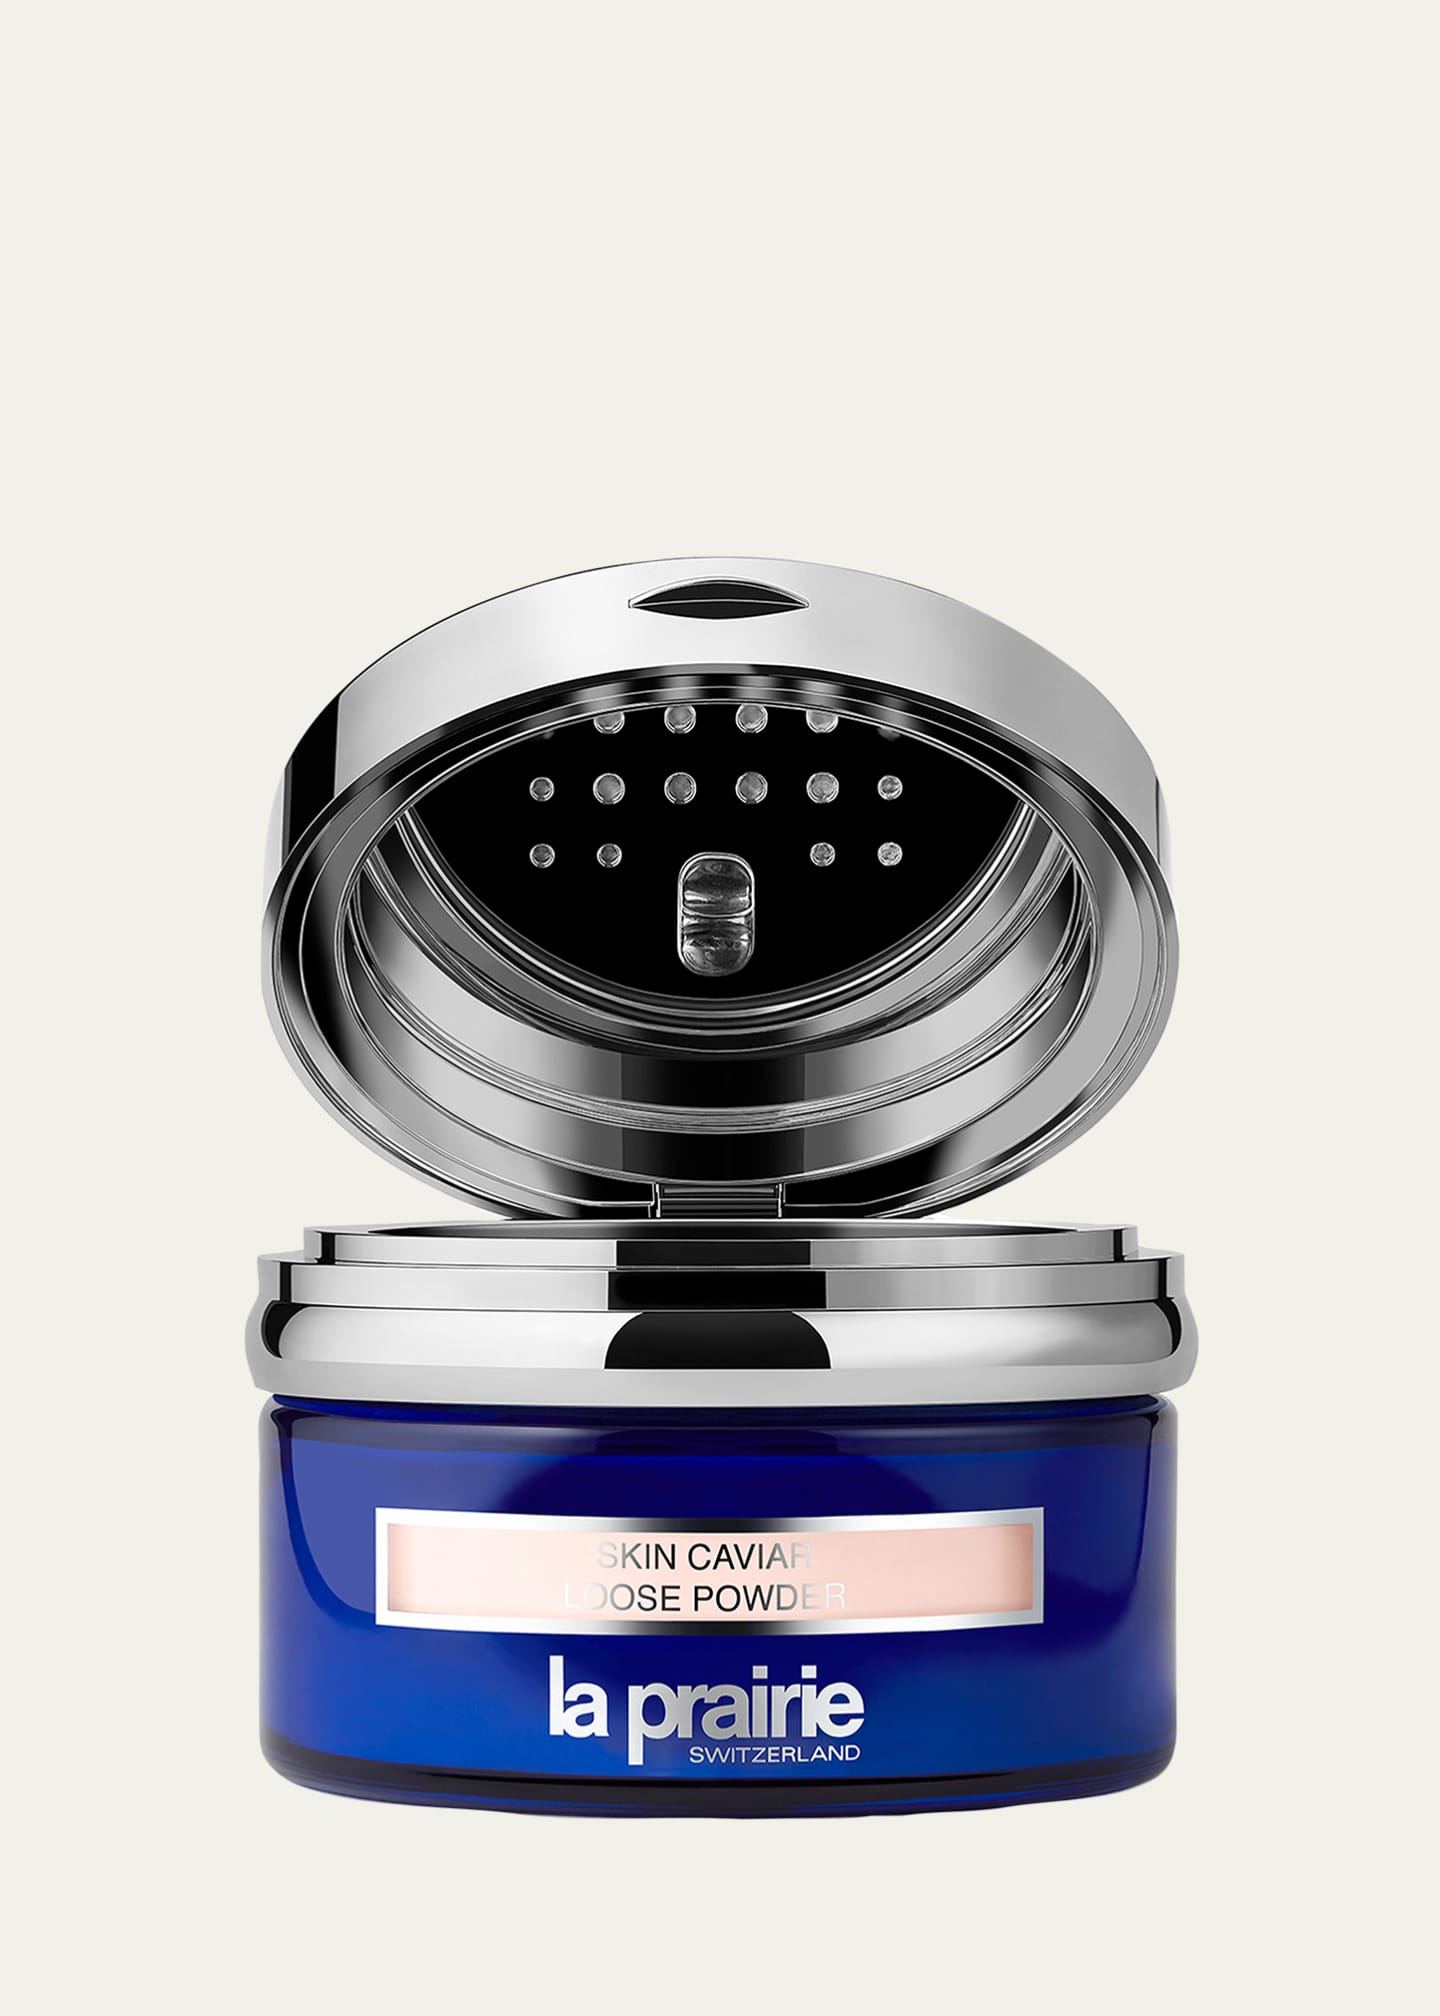 La Prairie Skin Caviar Loose Powder Image 4 of 4